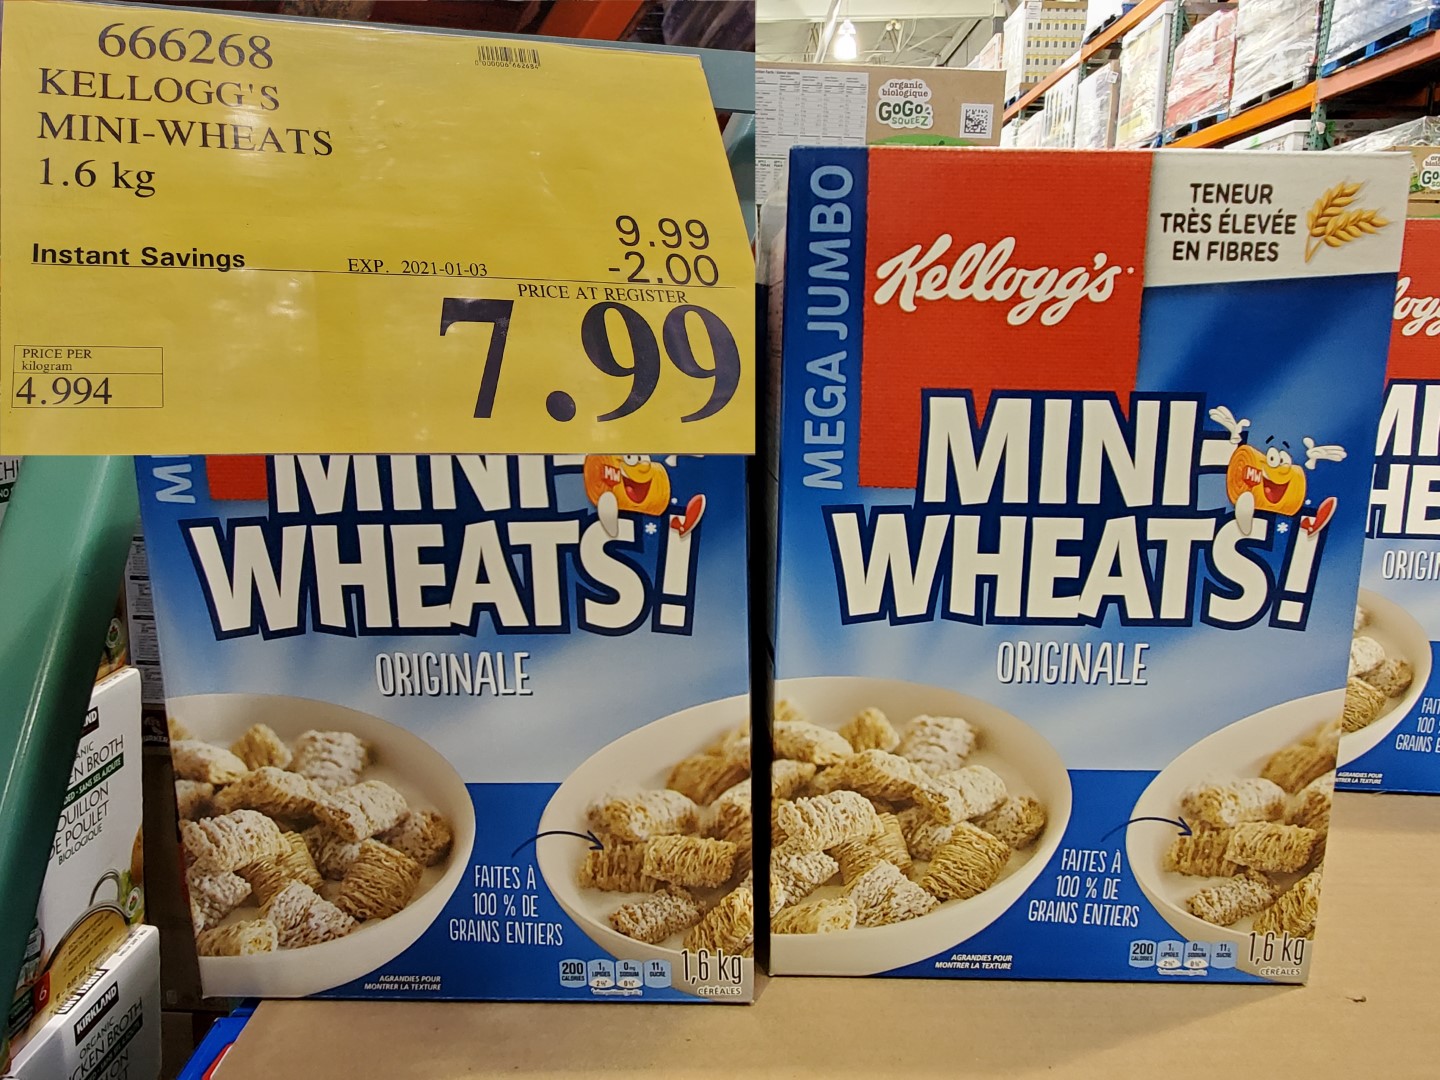 kellogg's mini-wheats